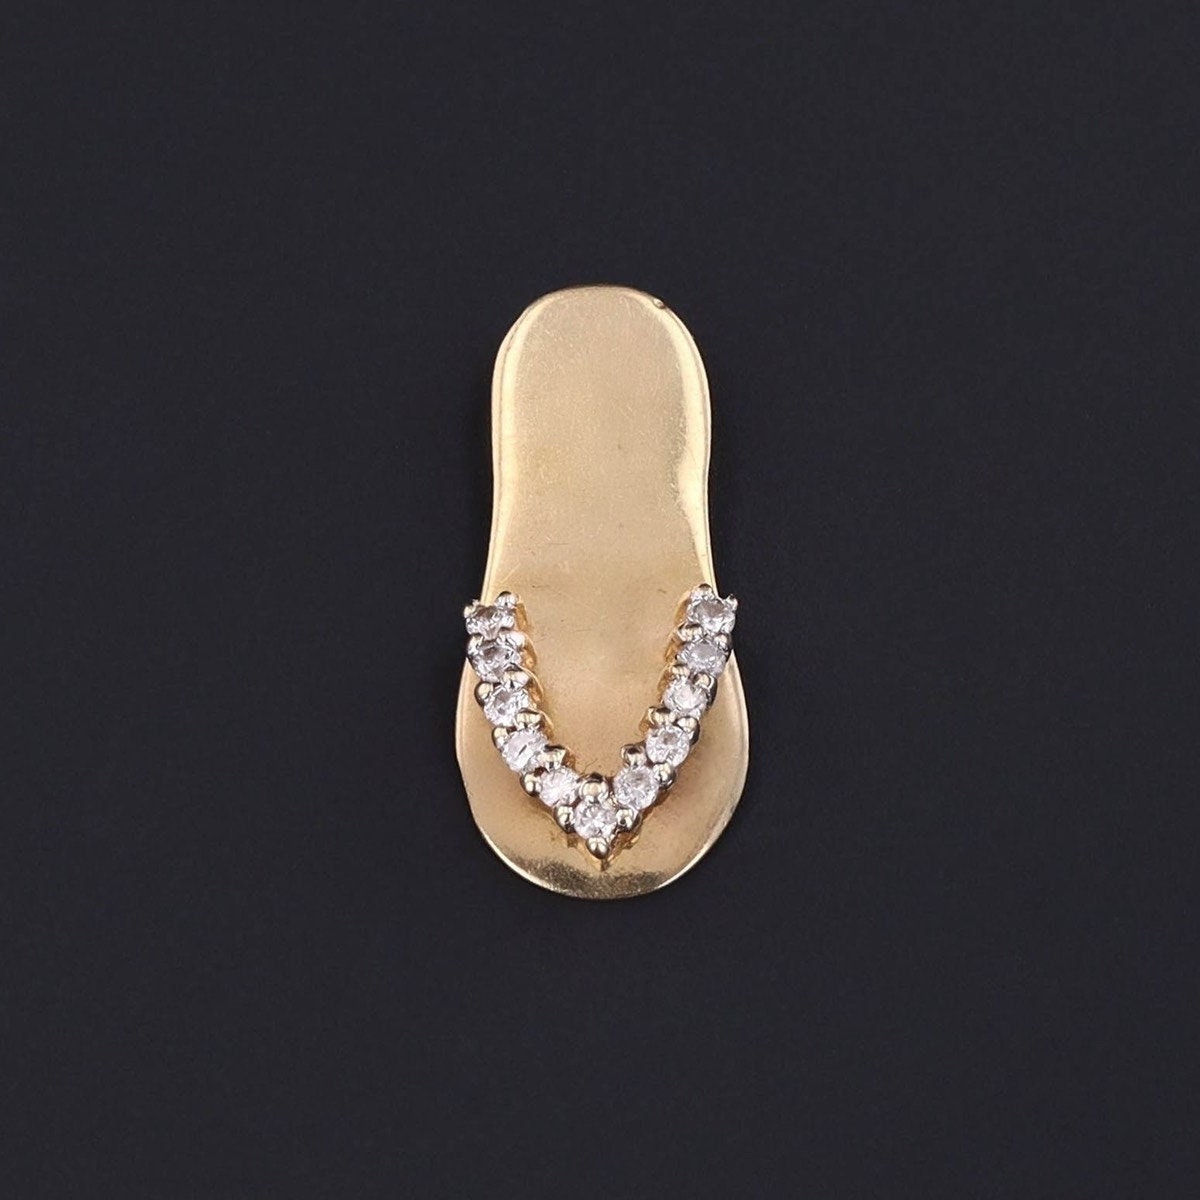 Diamond Flip Flop Pendant or Charm of 14k Gold